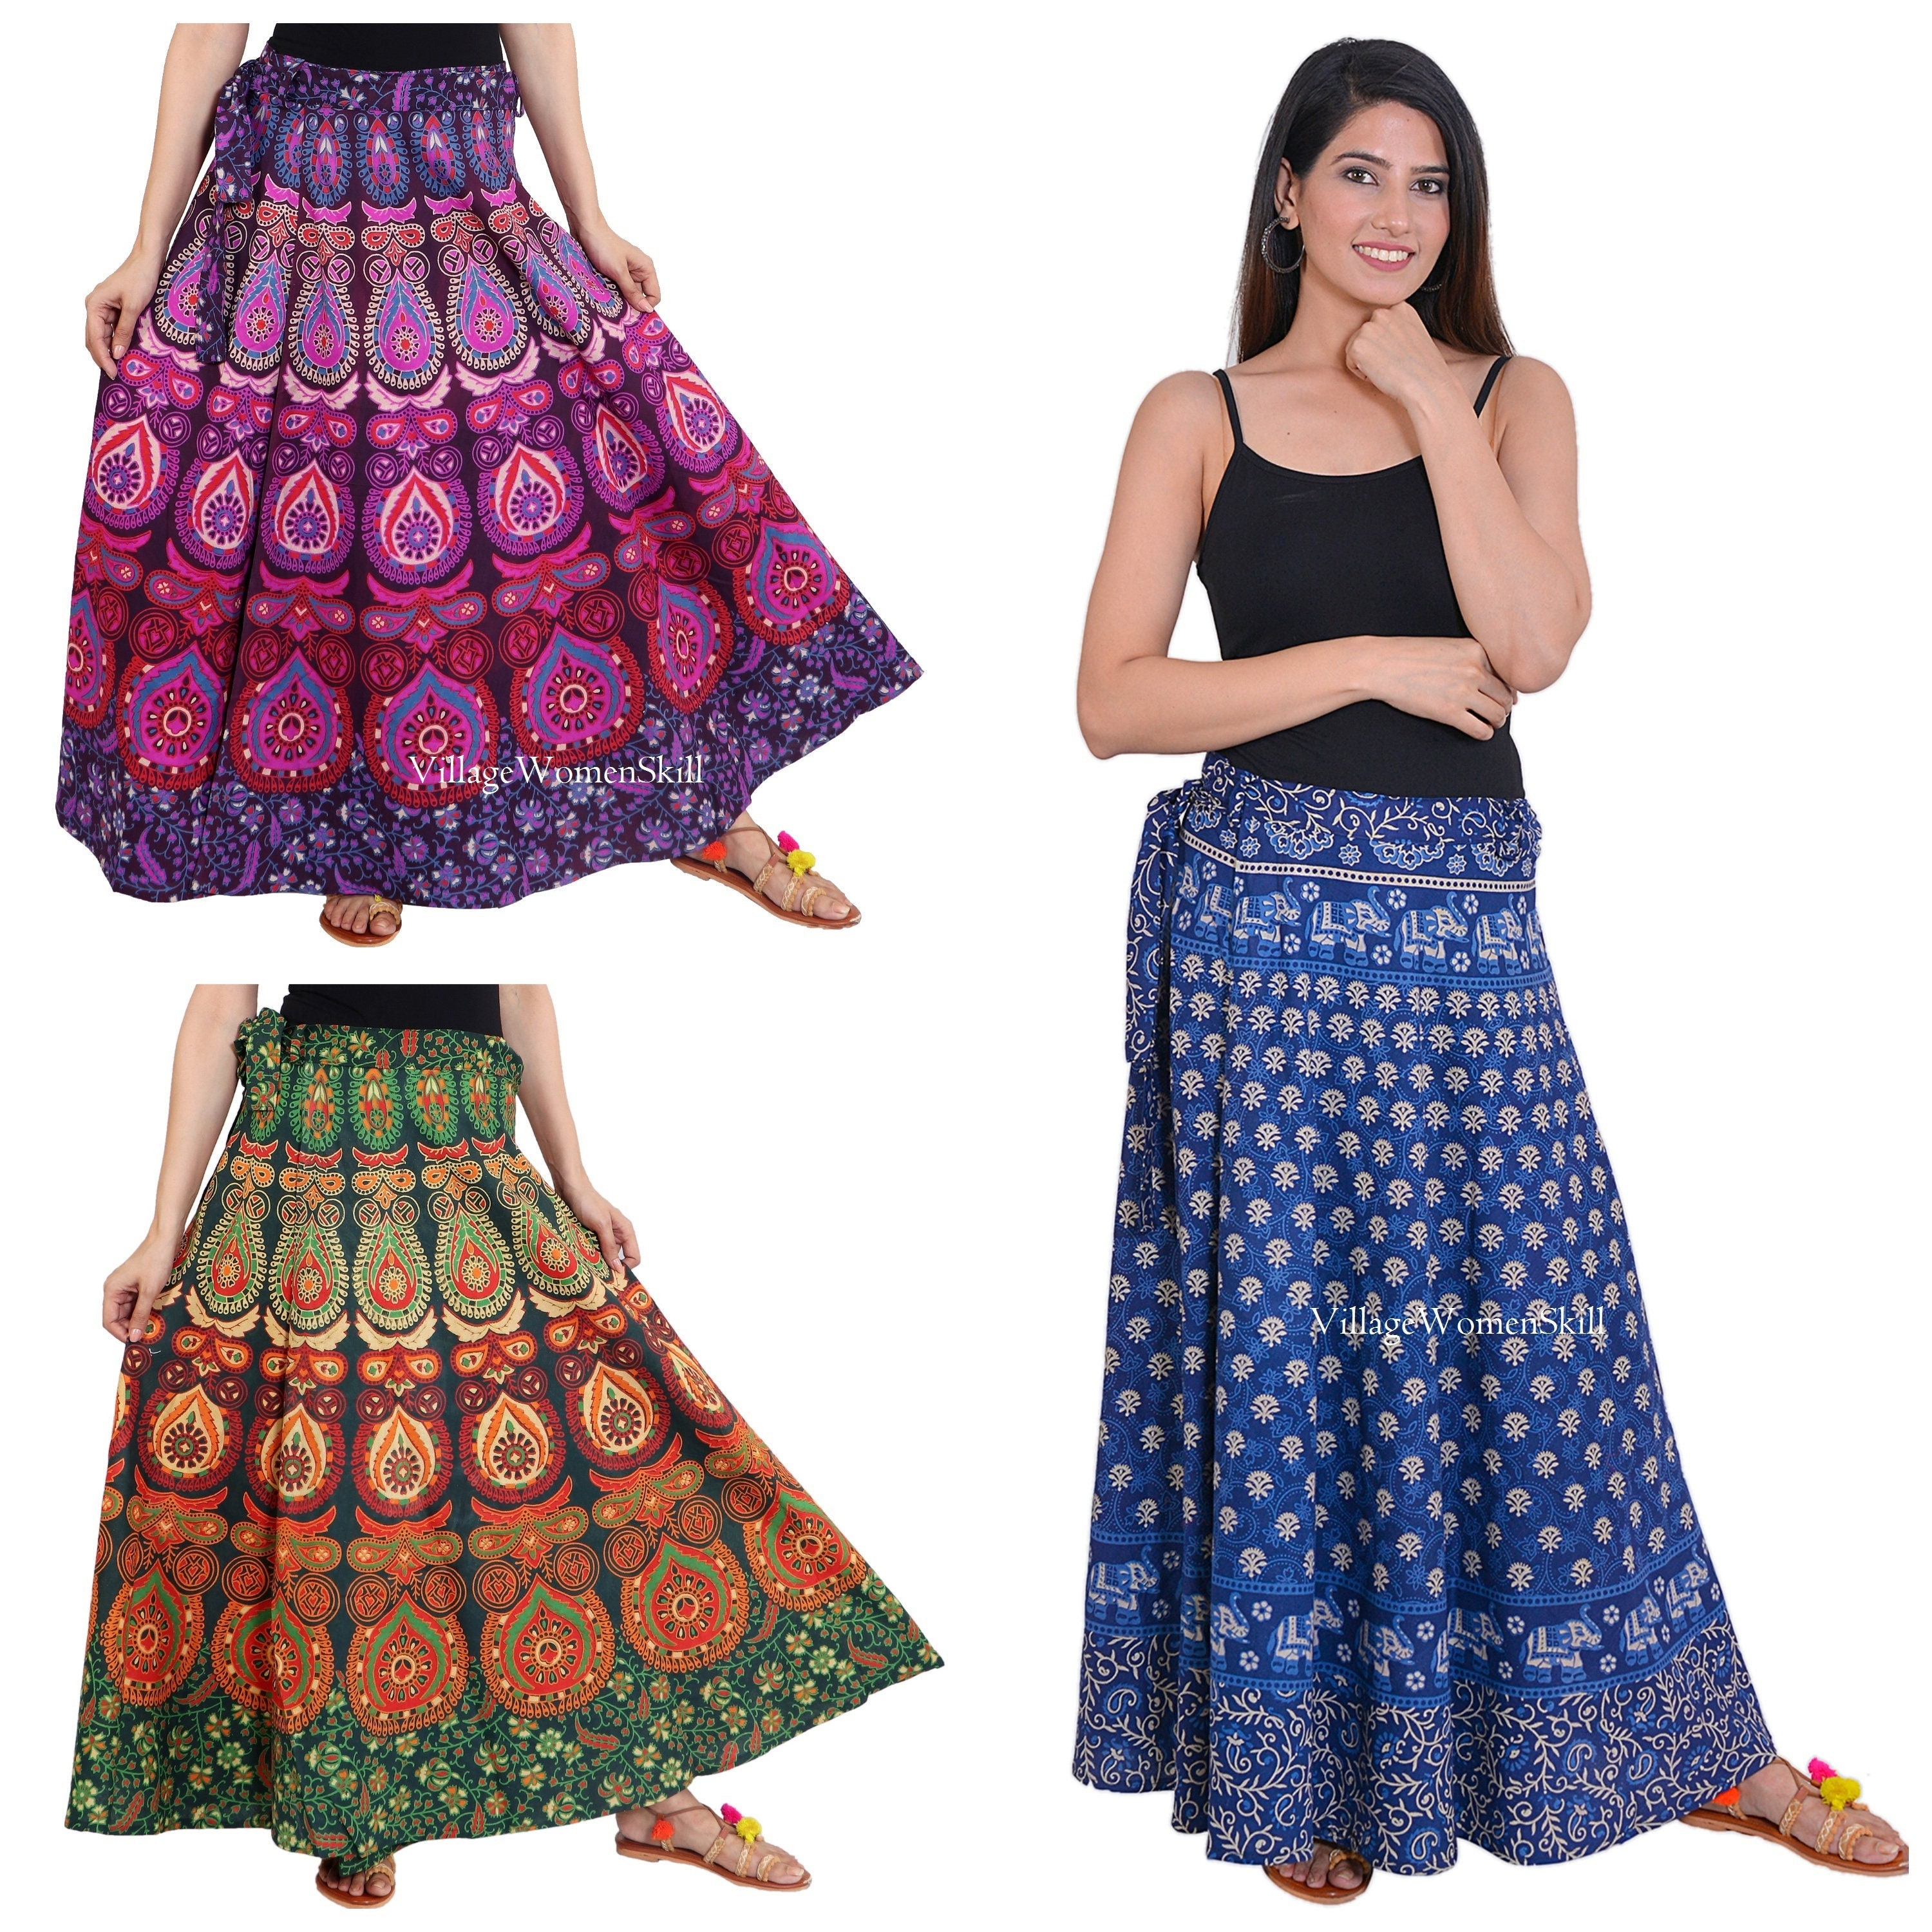 Hippie dress skirt at Rs 850, Ladies Skirts in Jaipur